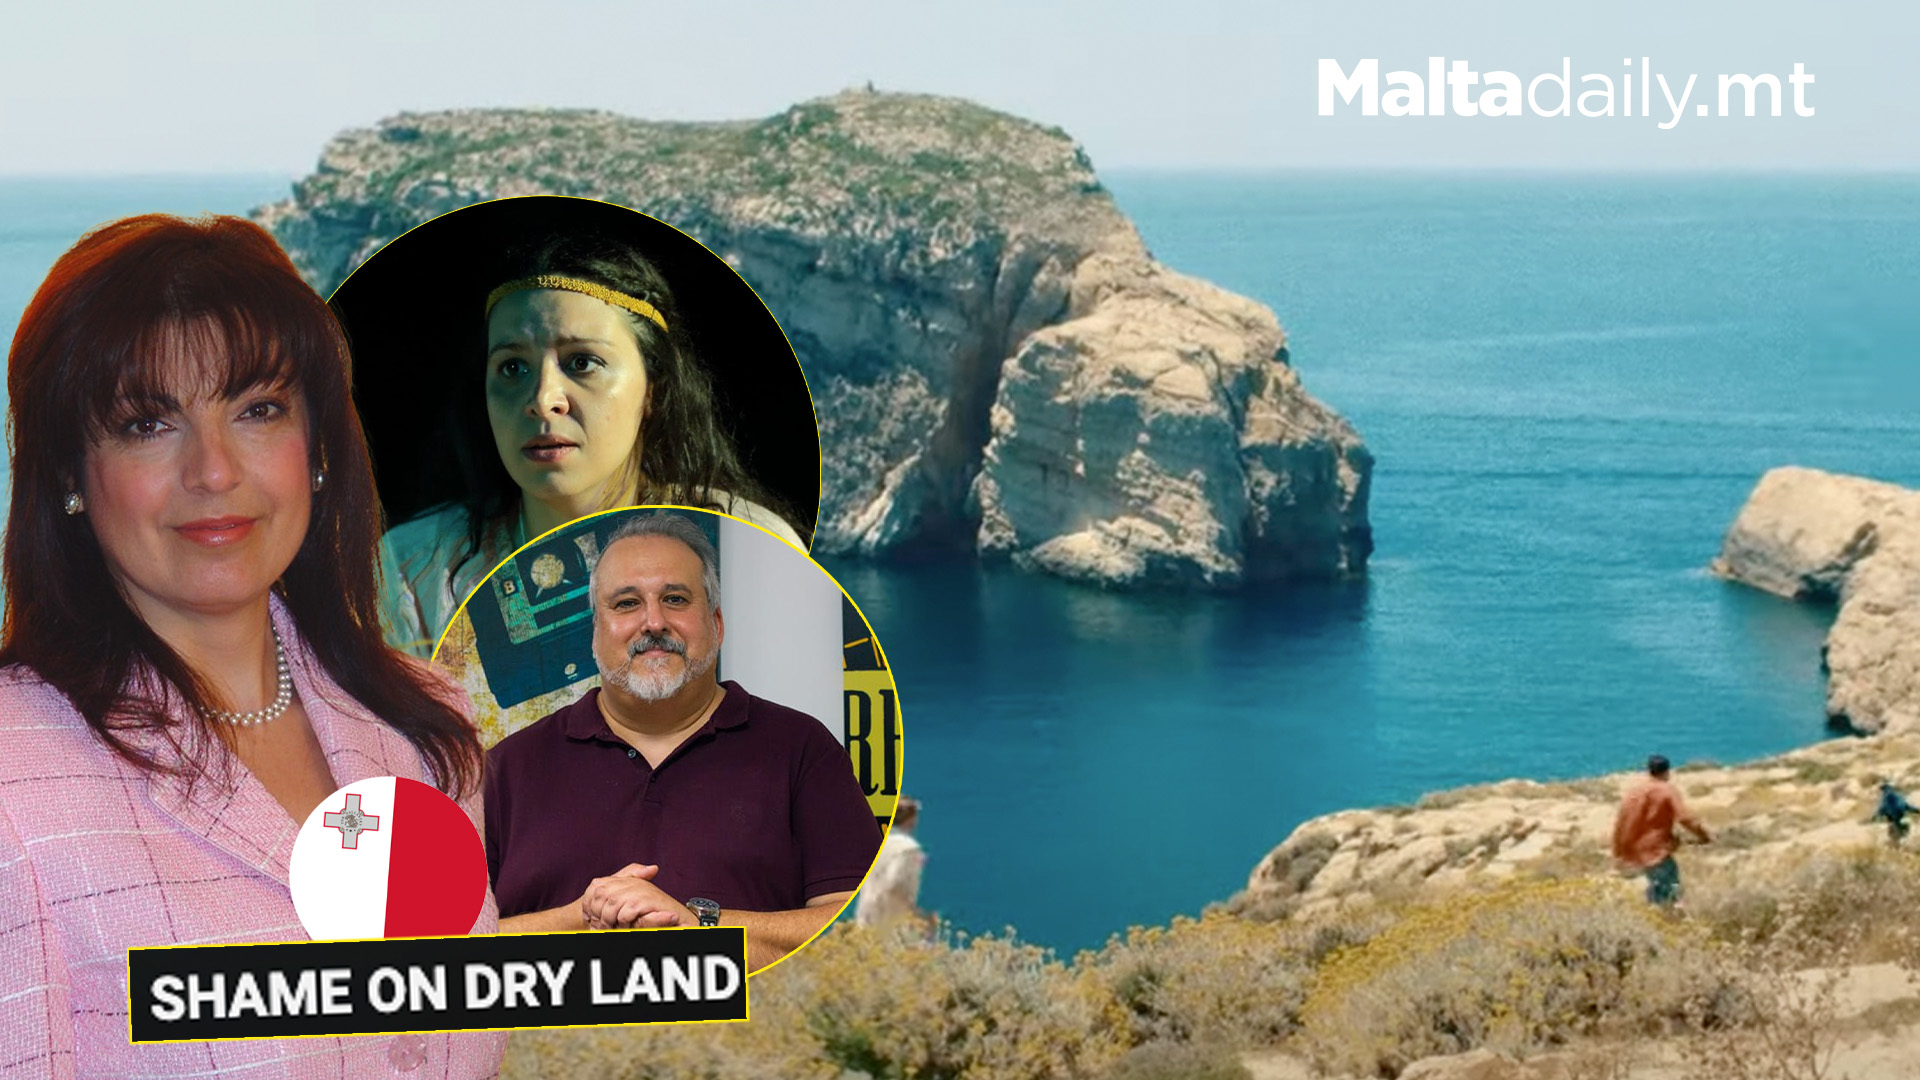 Film With Maltese Cast Members To Finally Premiere In Malta